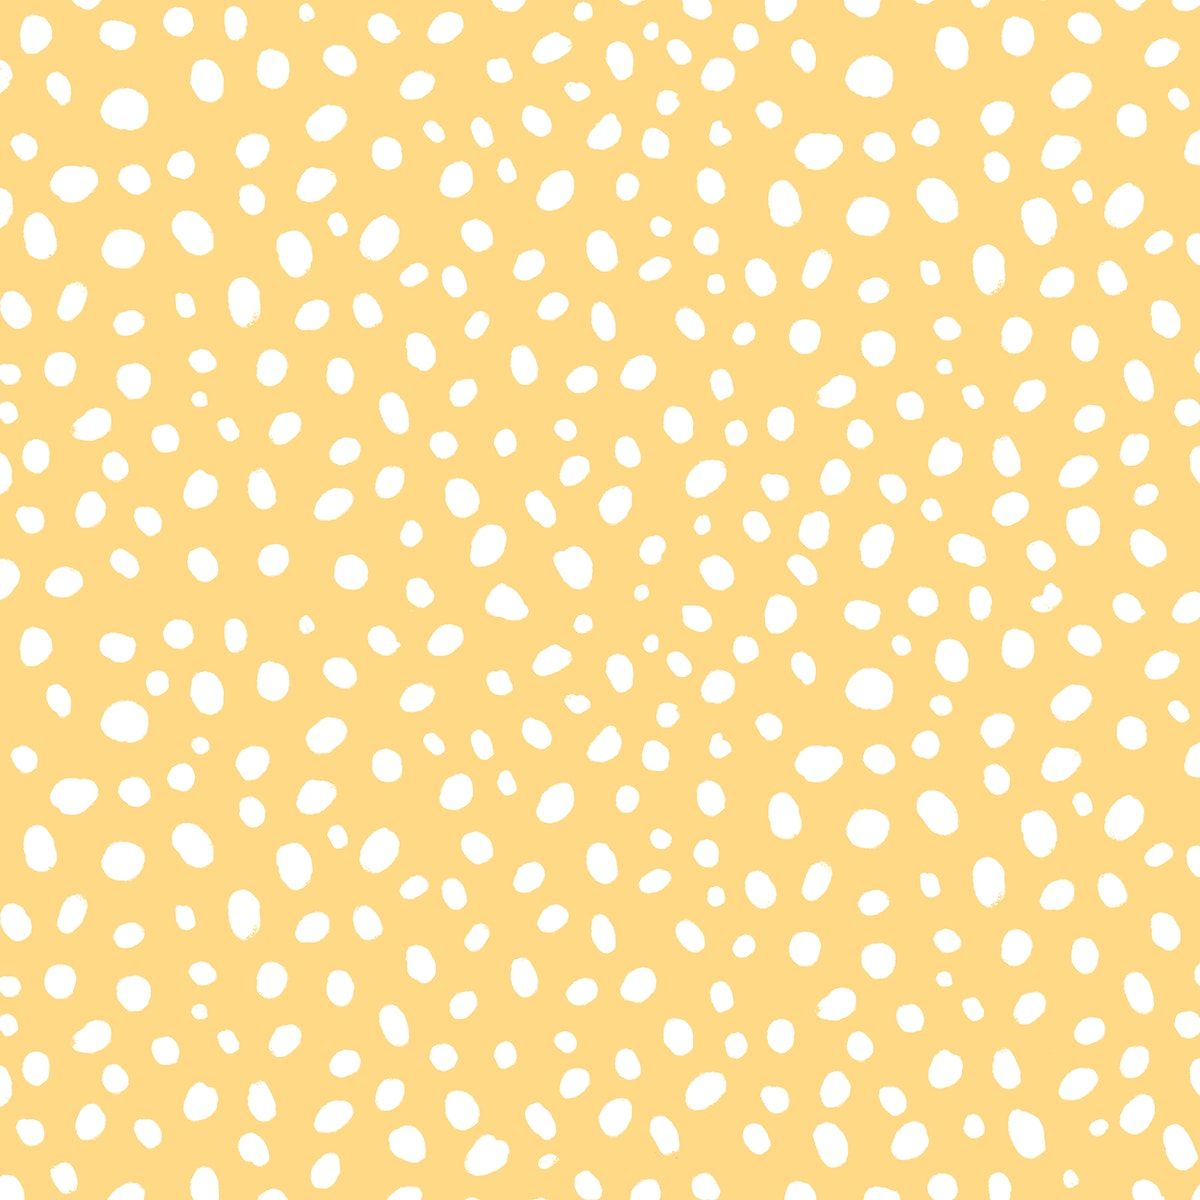 Aesthetic Yellow Background Image Wallpaper